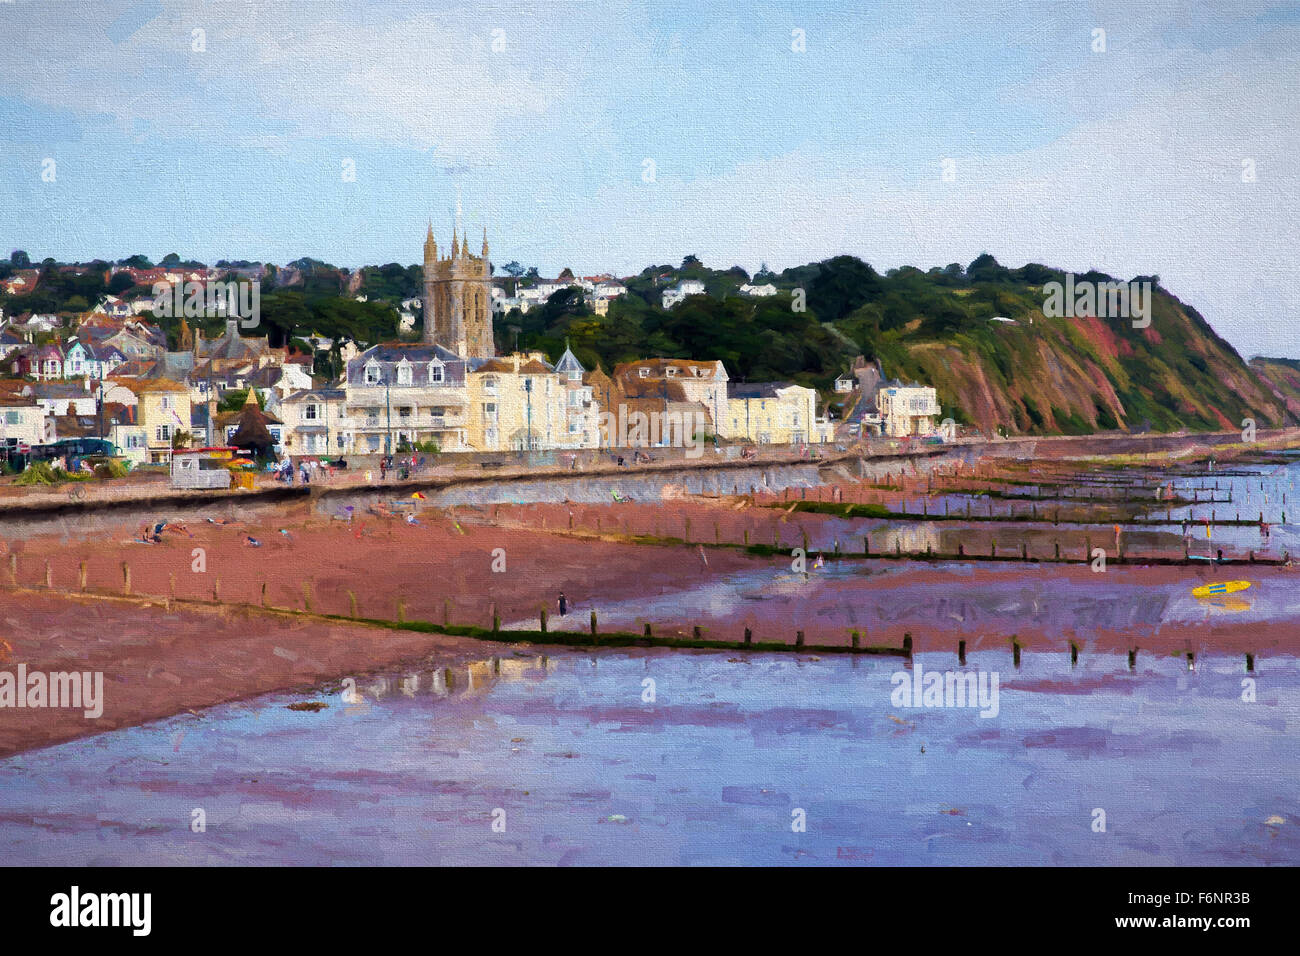 Teignmouth Devon tourist town England UK blue sky in colourful traditional English coastal scene illustration like oil painting Stock Photo